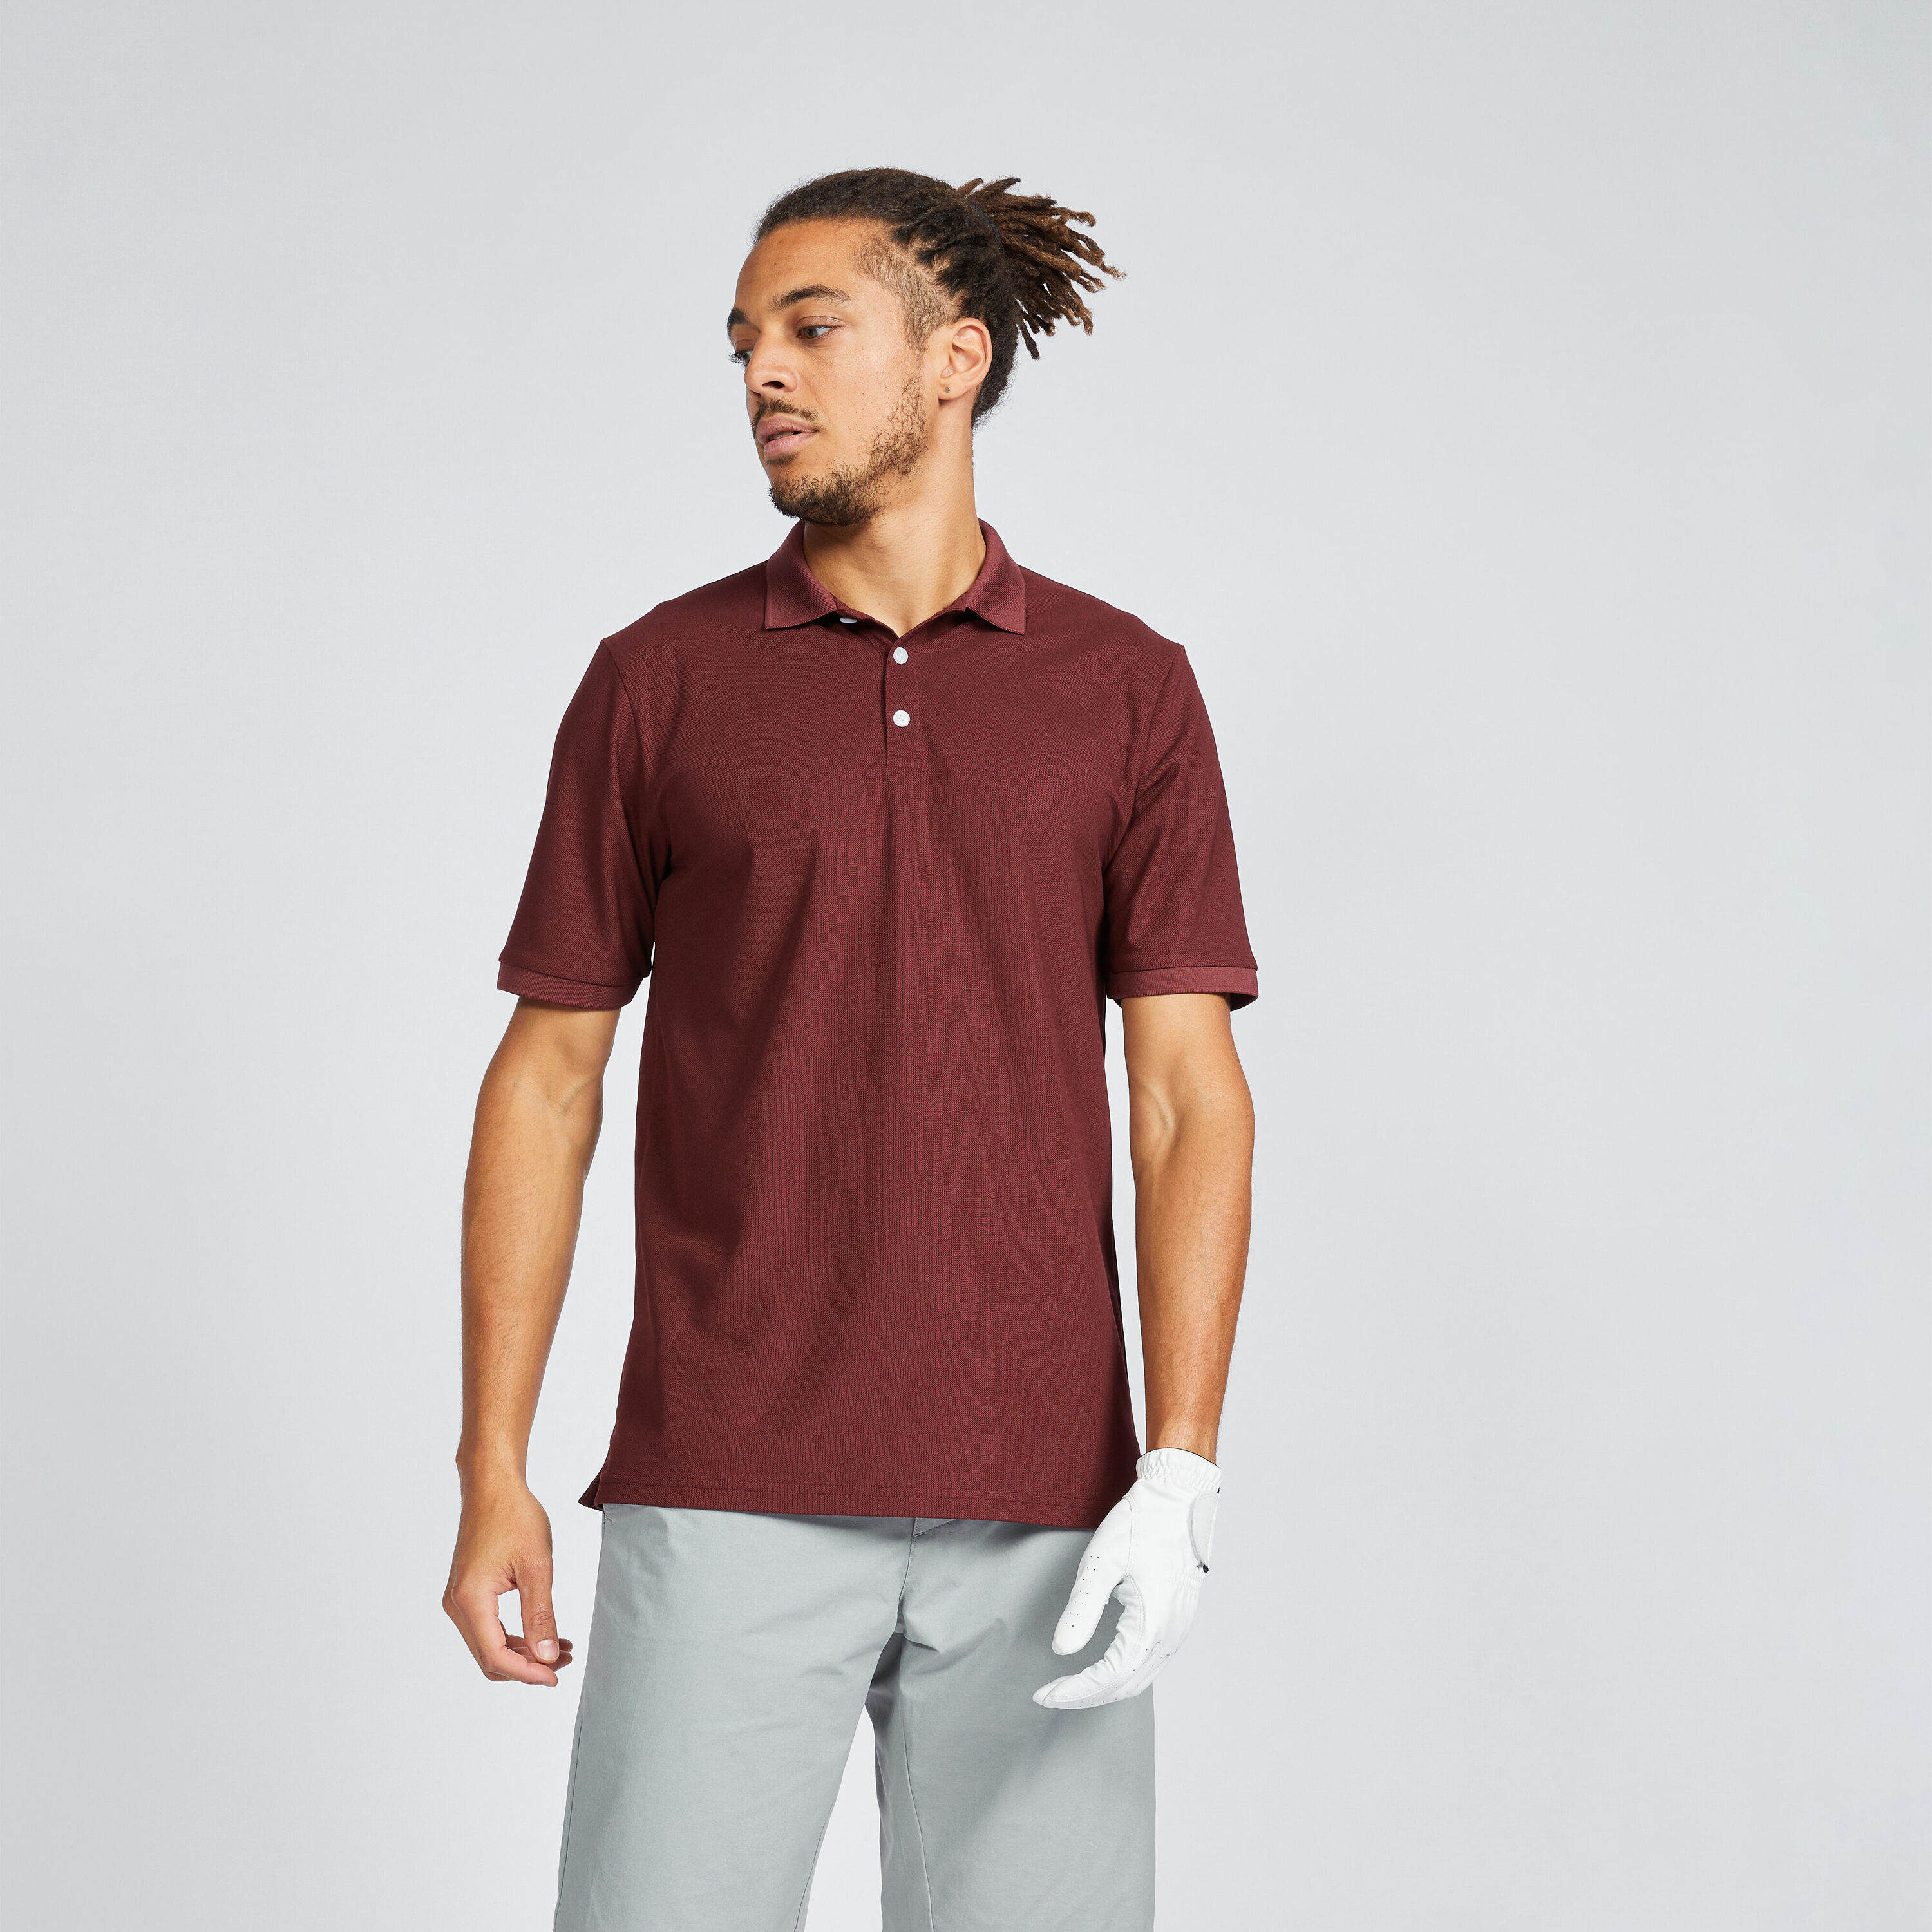 INESIS Men's short-sleeved golf polo shirt - WW500 burgundy